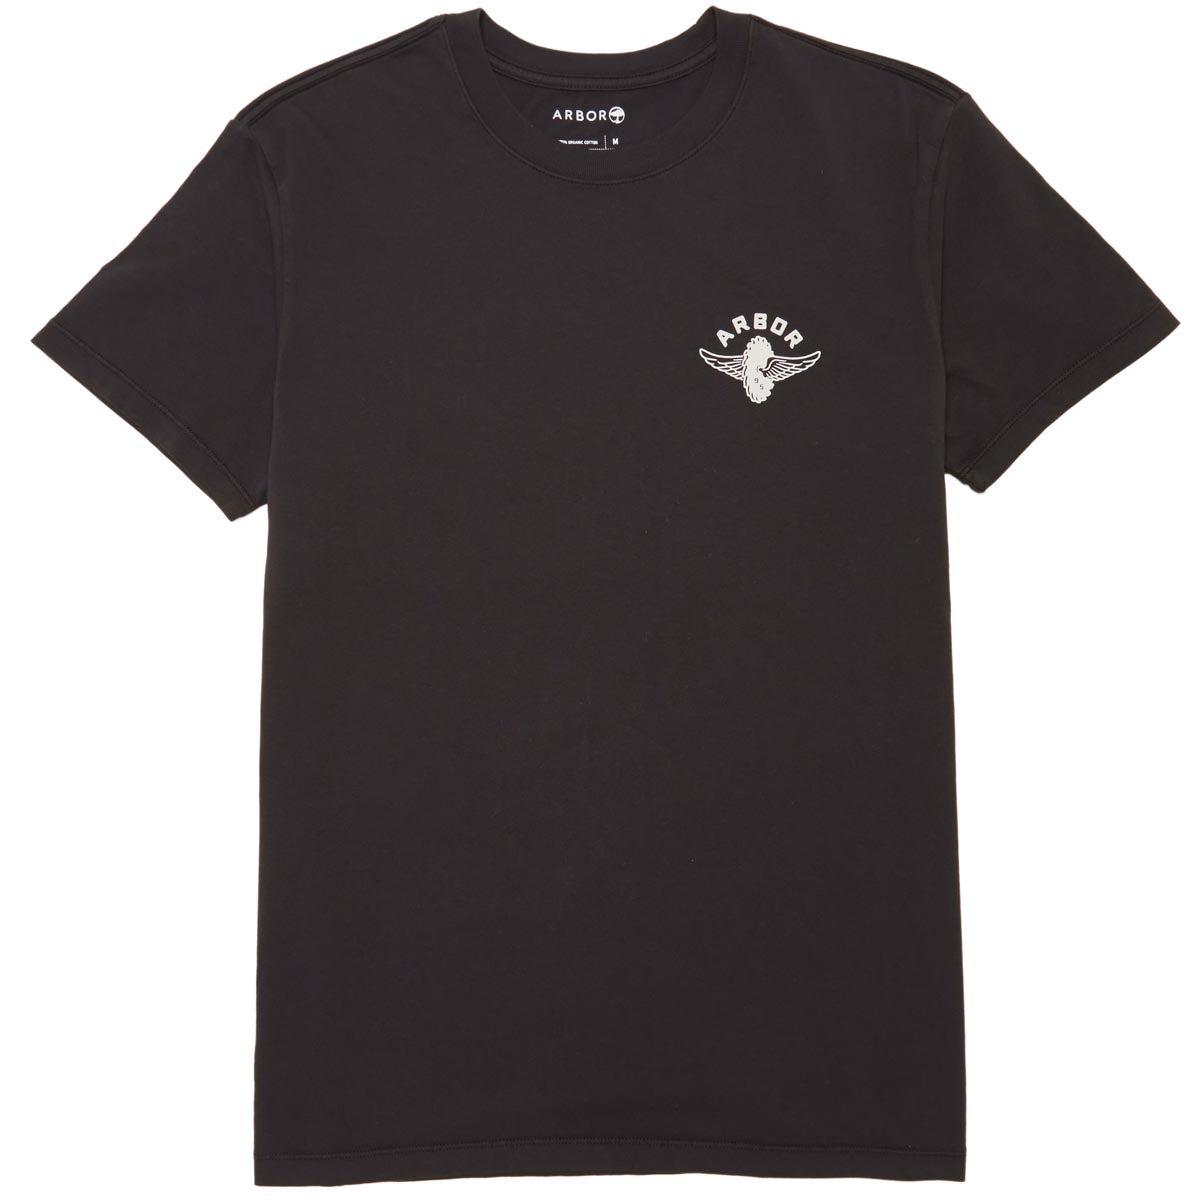 Arbor Woodwing T-Shirt - Vintage Black image 2